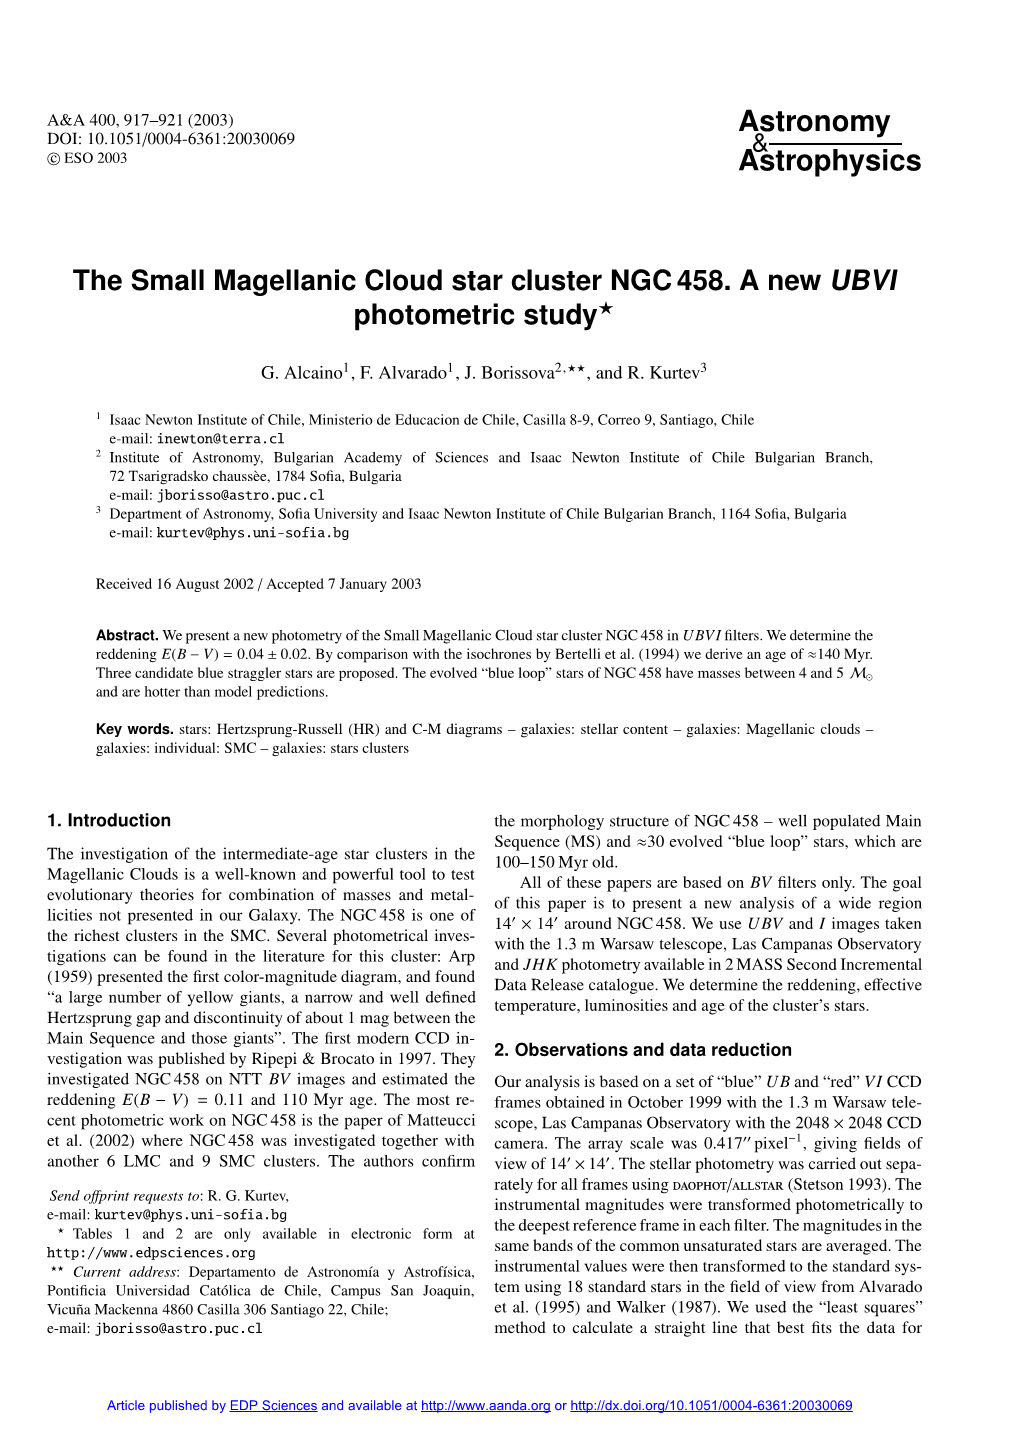 The Small Magellanic Cloud Star Cluster NGC 458. a New UBVI Photometric Study?